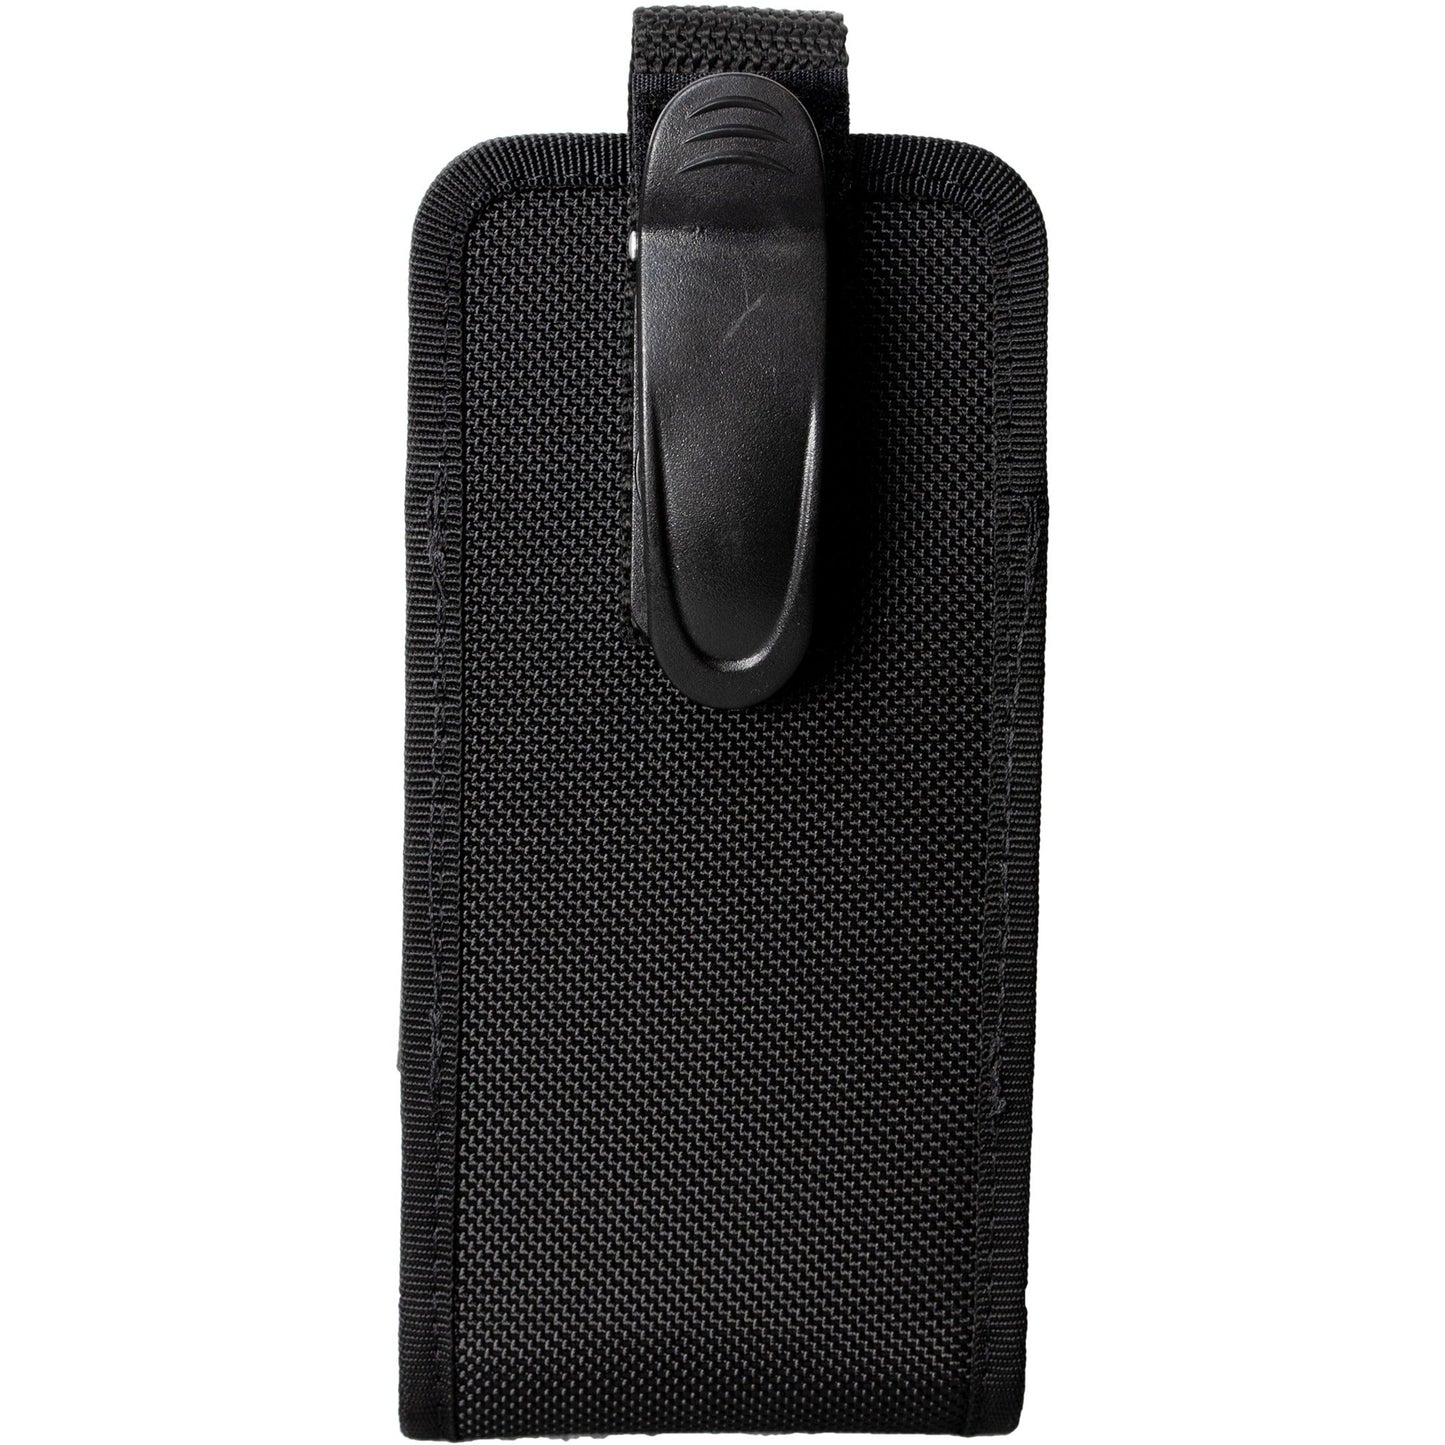 Socket Mobile Carrying Case (Holster) Socket Mobile Portable Scanner